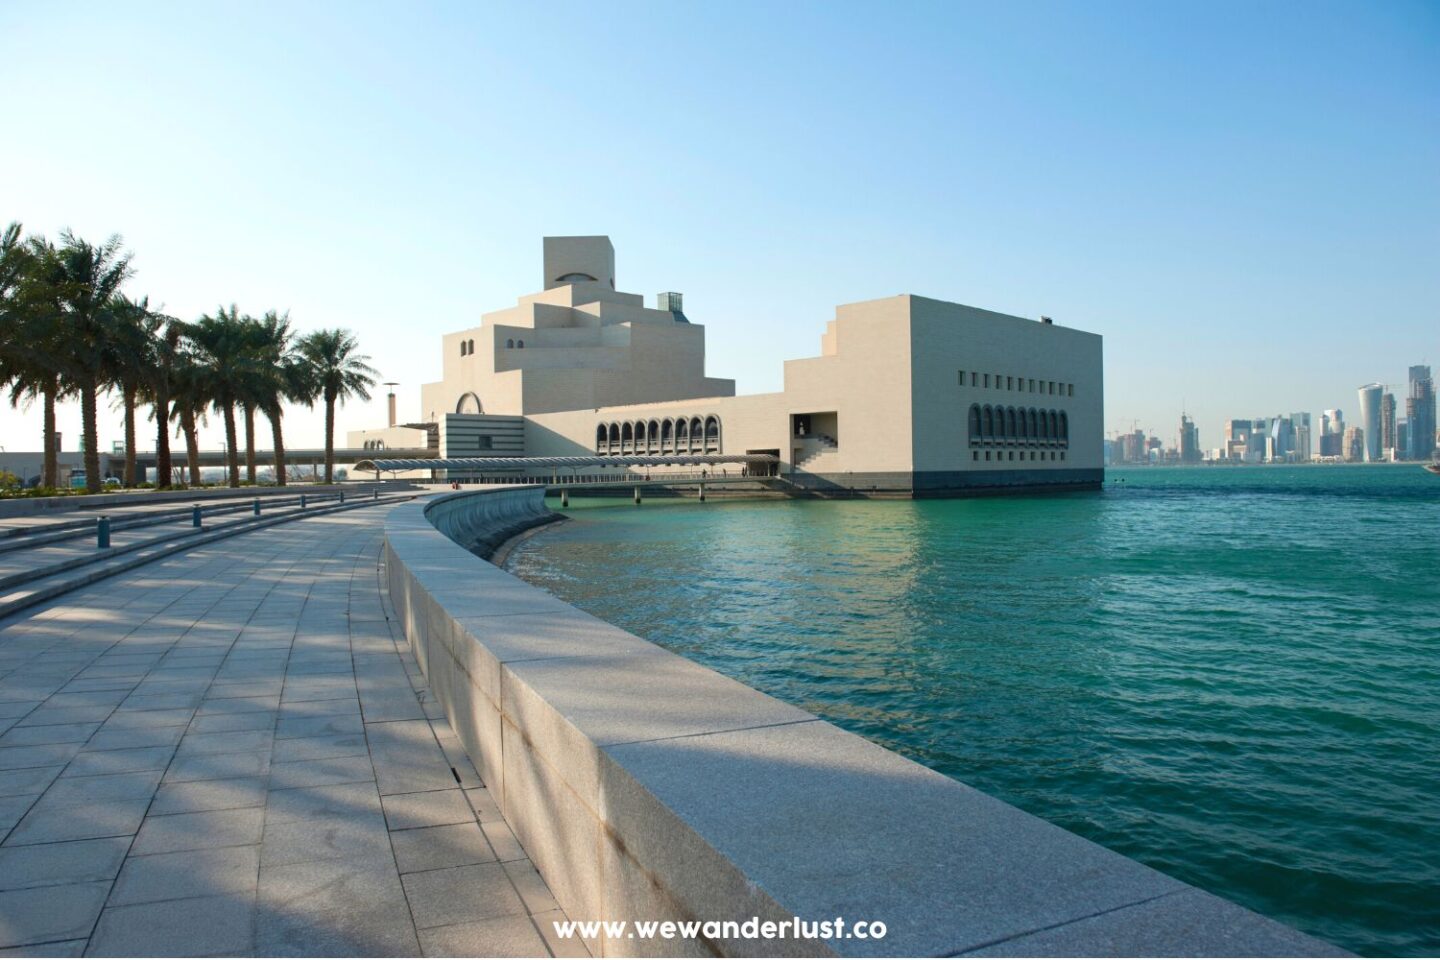 museum of islamic art qatar for 2022 fifa world cup